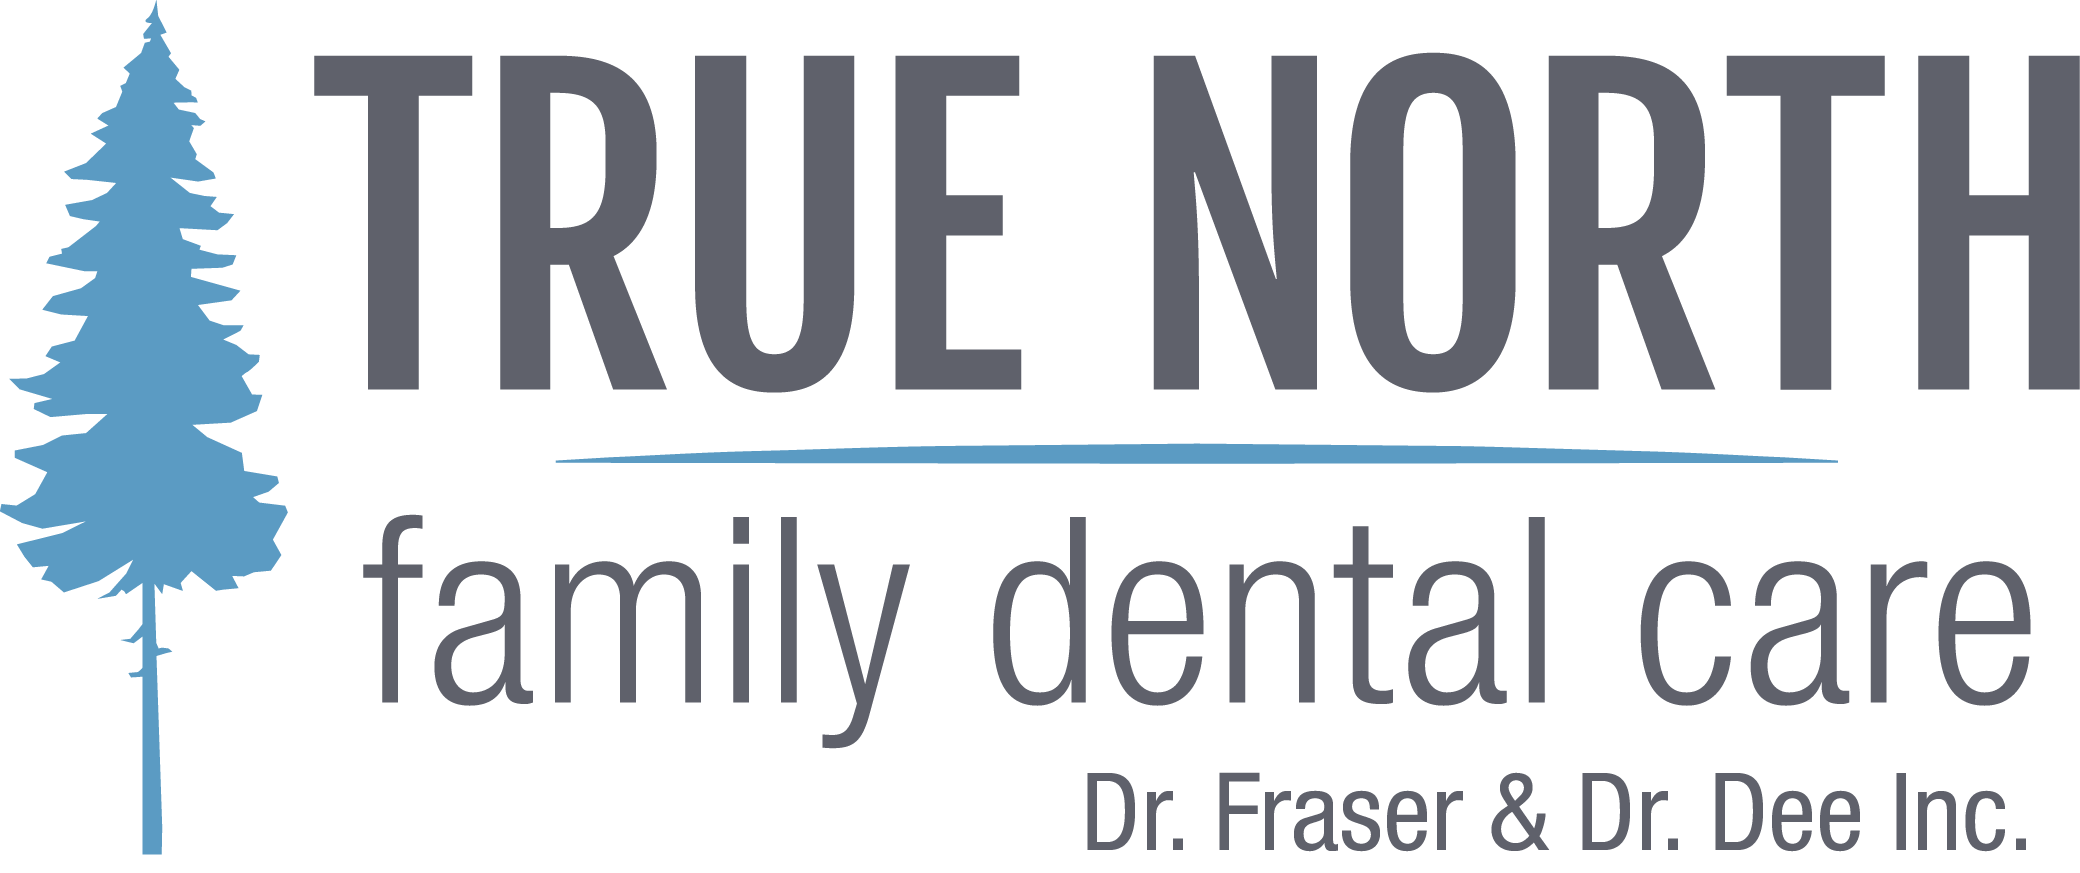 True North Family Dental Care